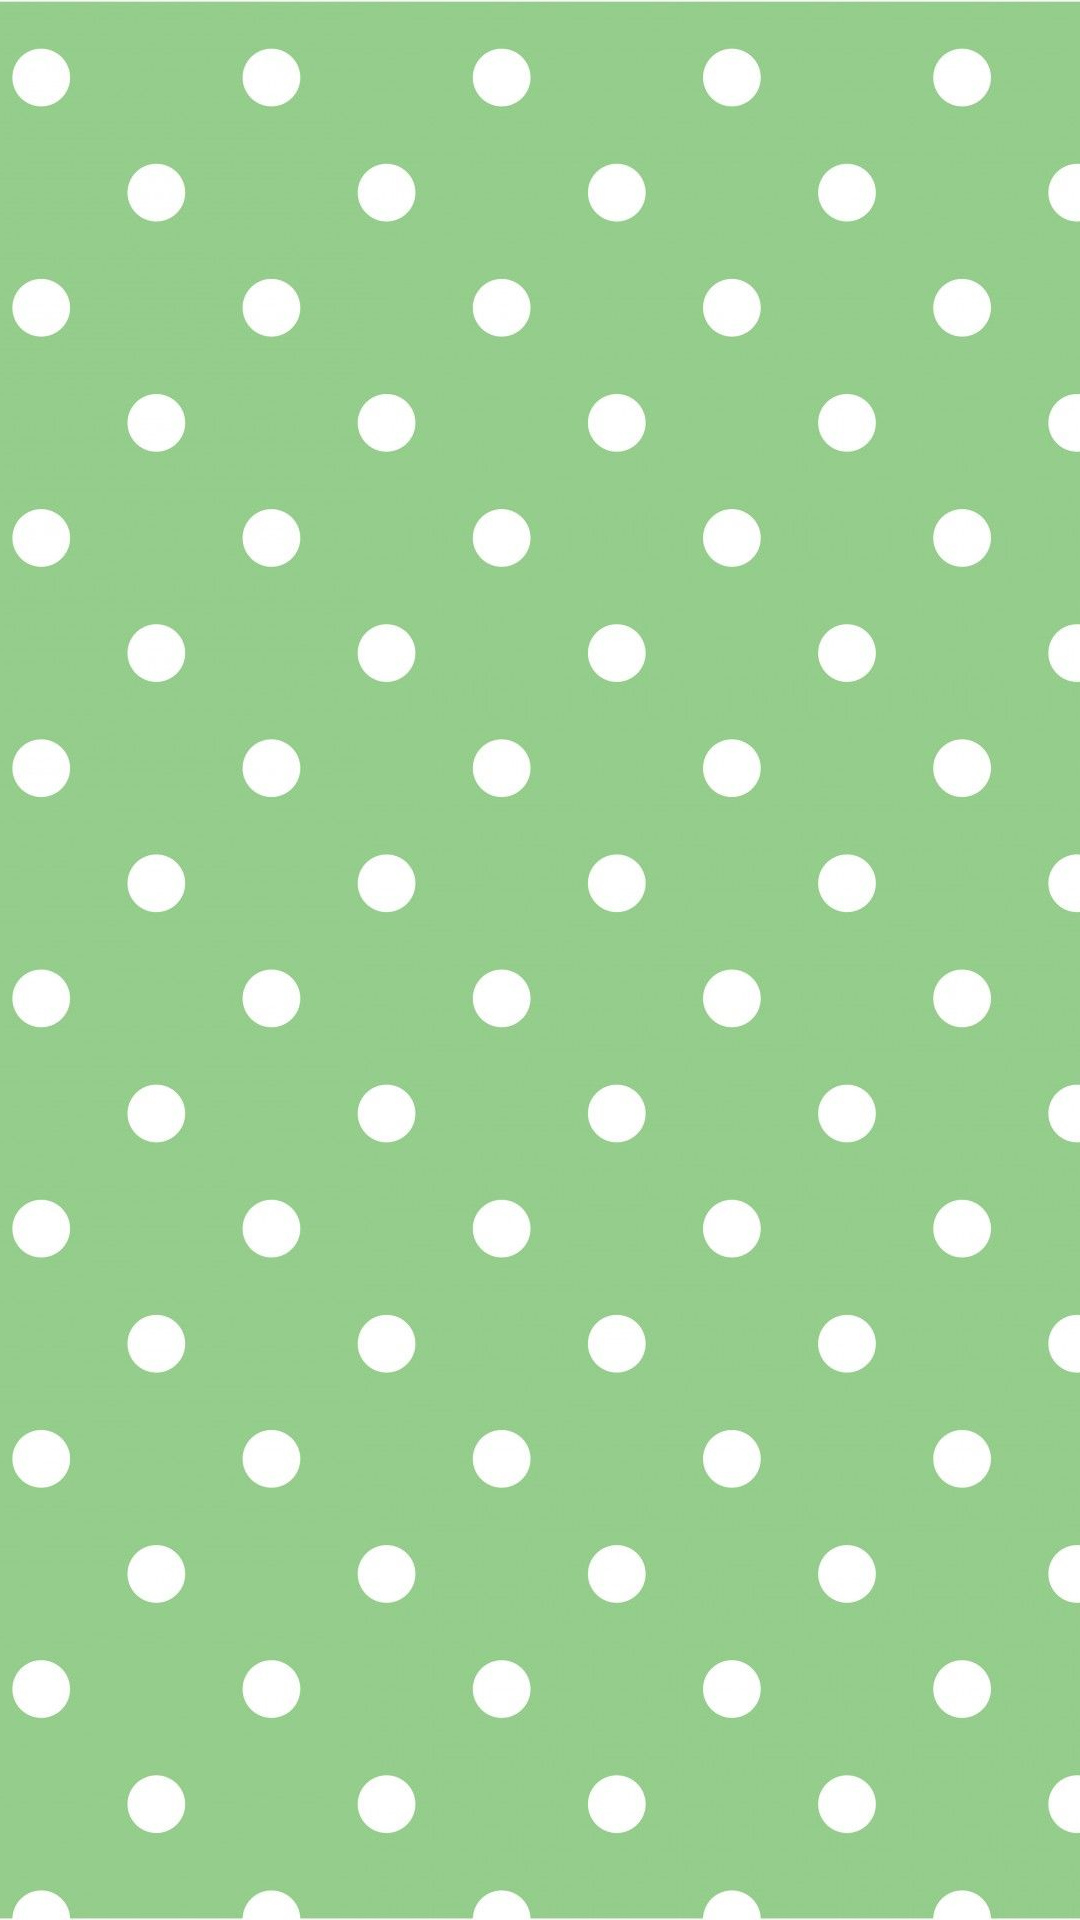 Polka Dot, Green color scheme, Natural and fresh, Modern style, 1080x1920 Full HD Phone